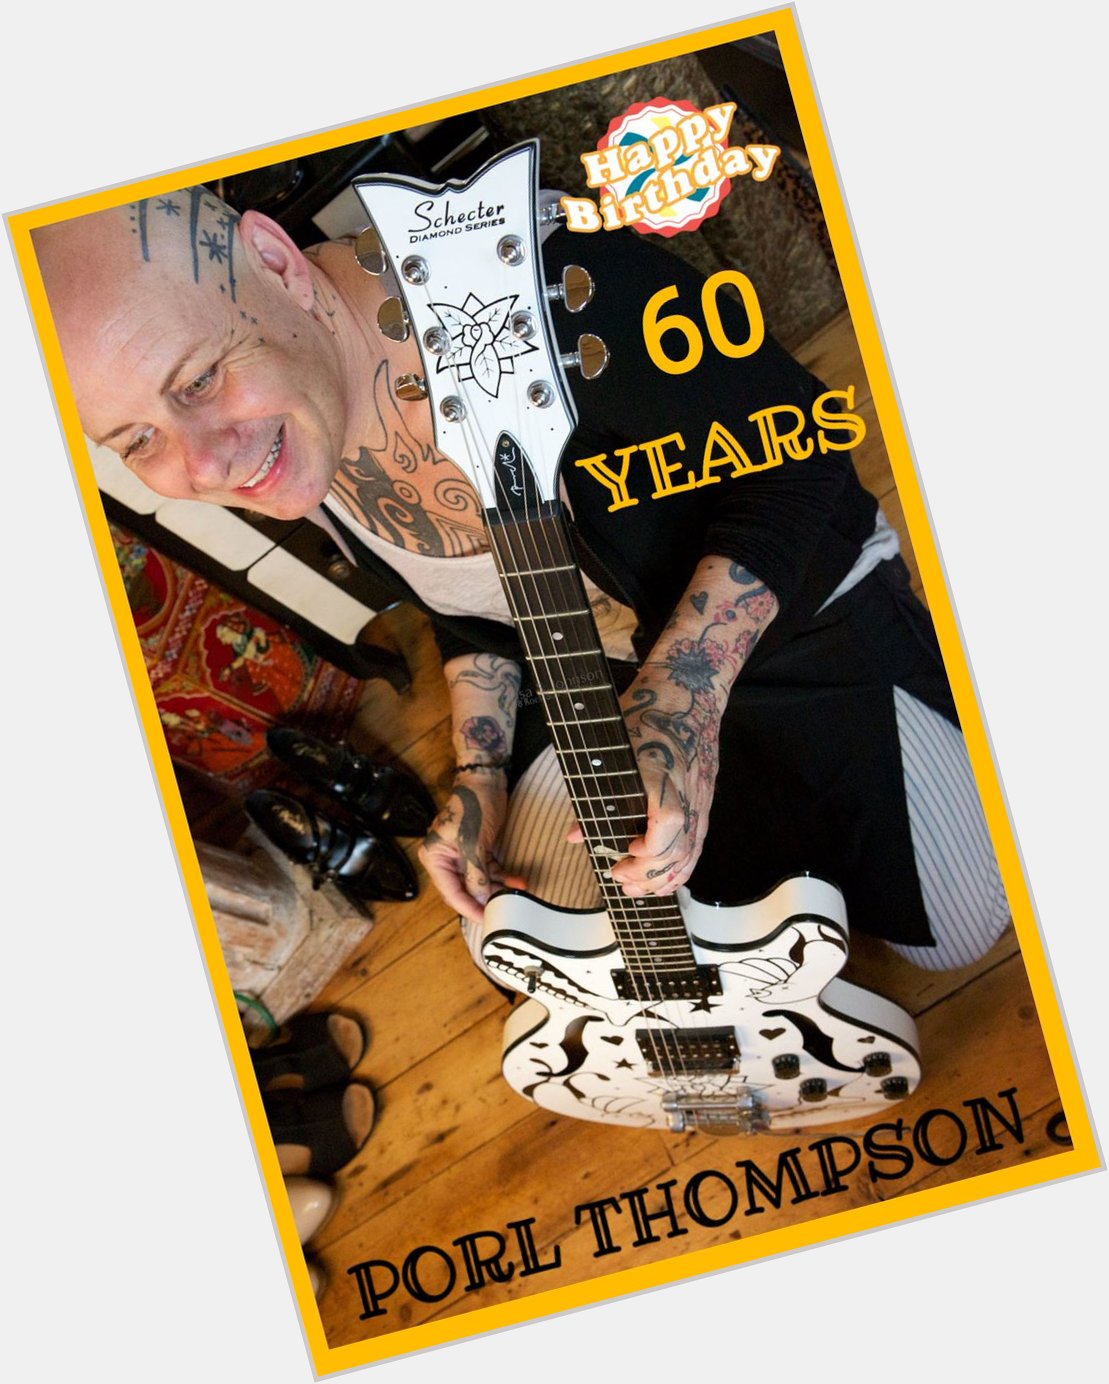  HAPPY BIRTHDAY PORL THOMPSON!!
60 YEARS!! 